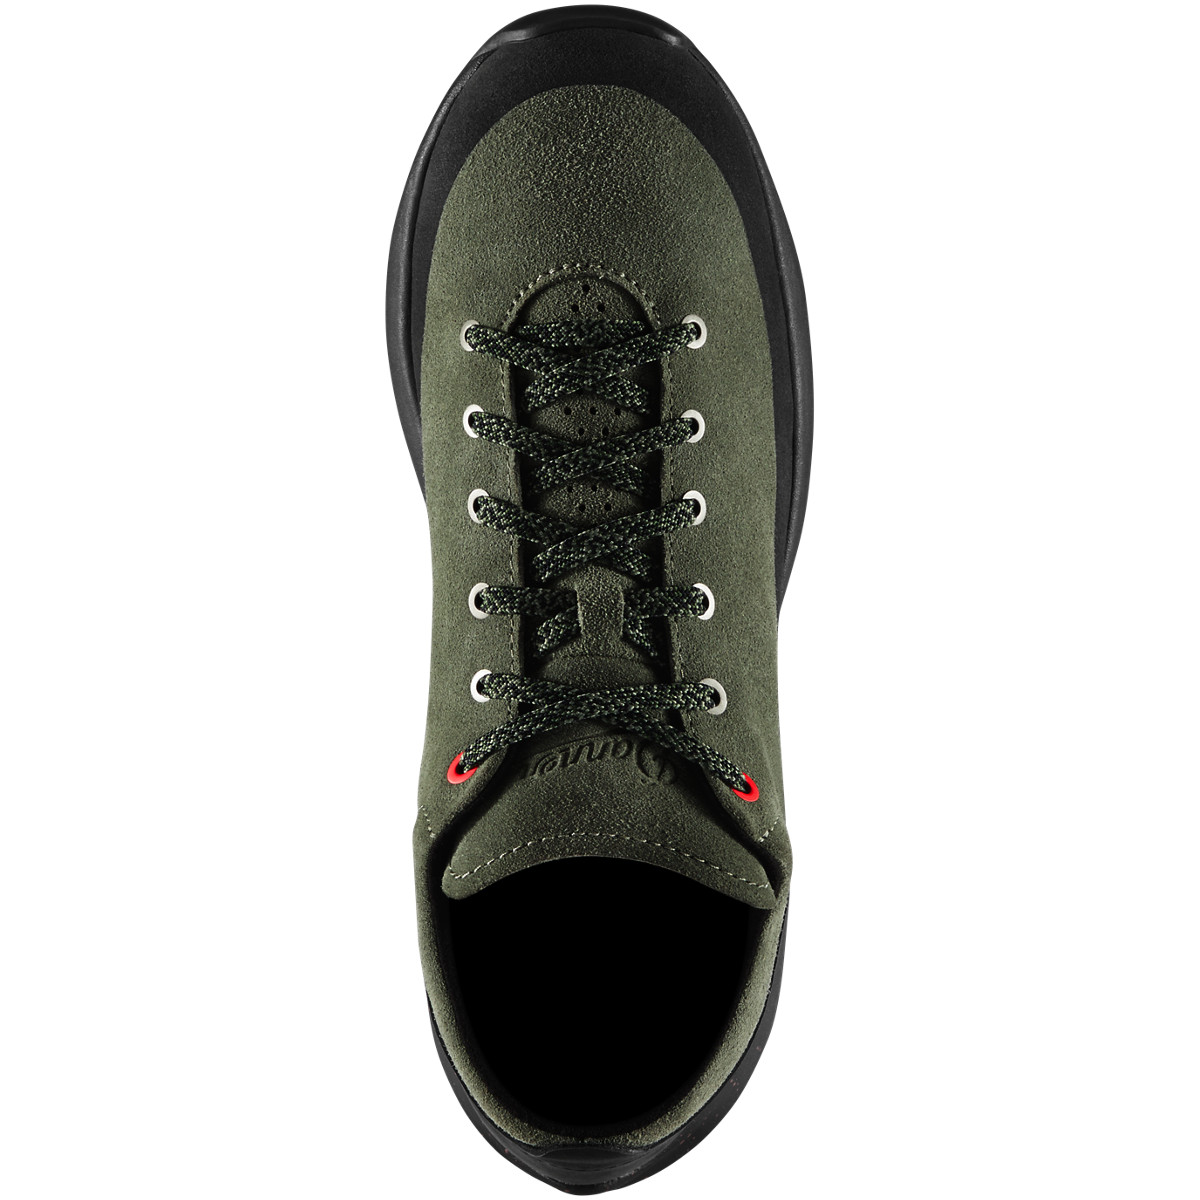 Danner Men's Caprine Low 3 Lifestyle Shoe